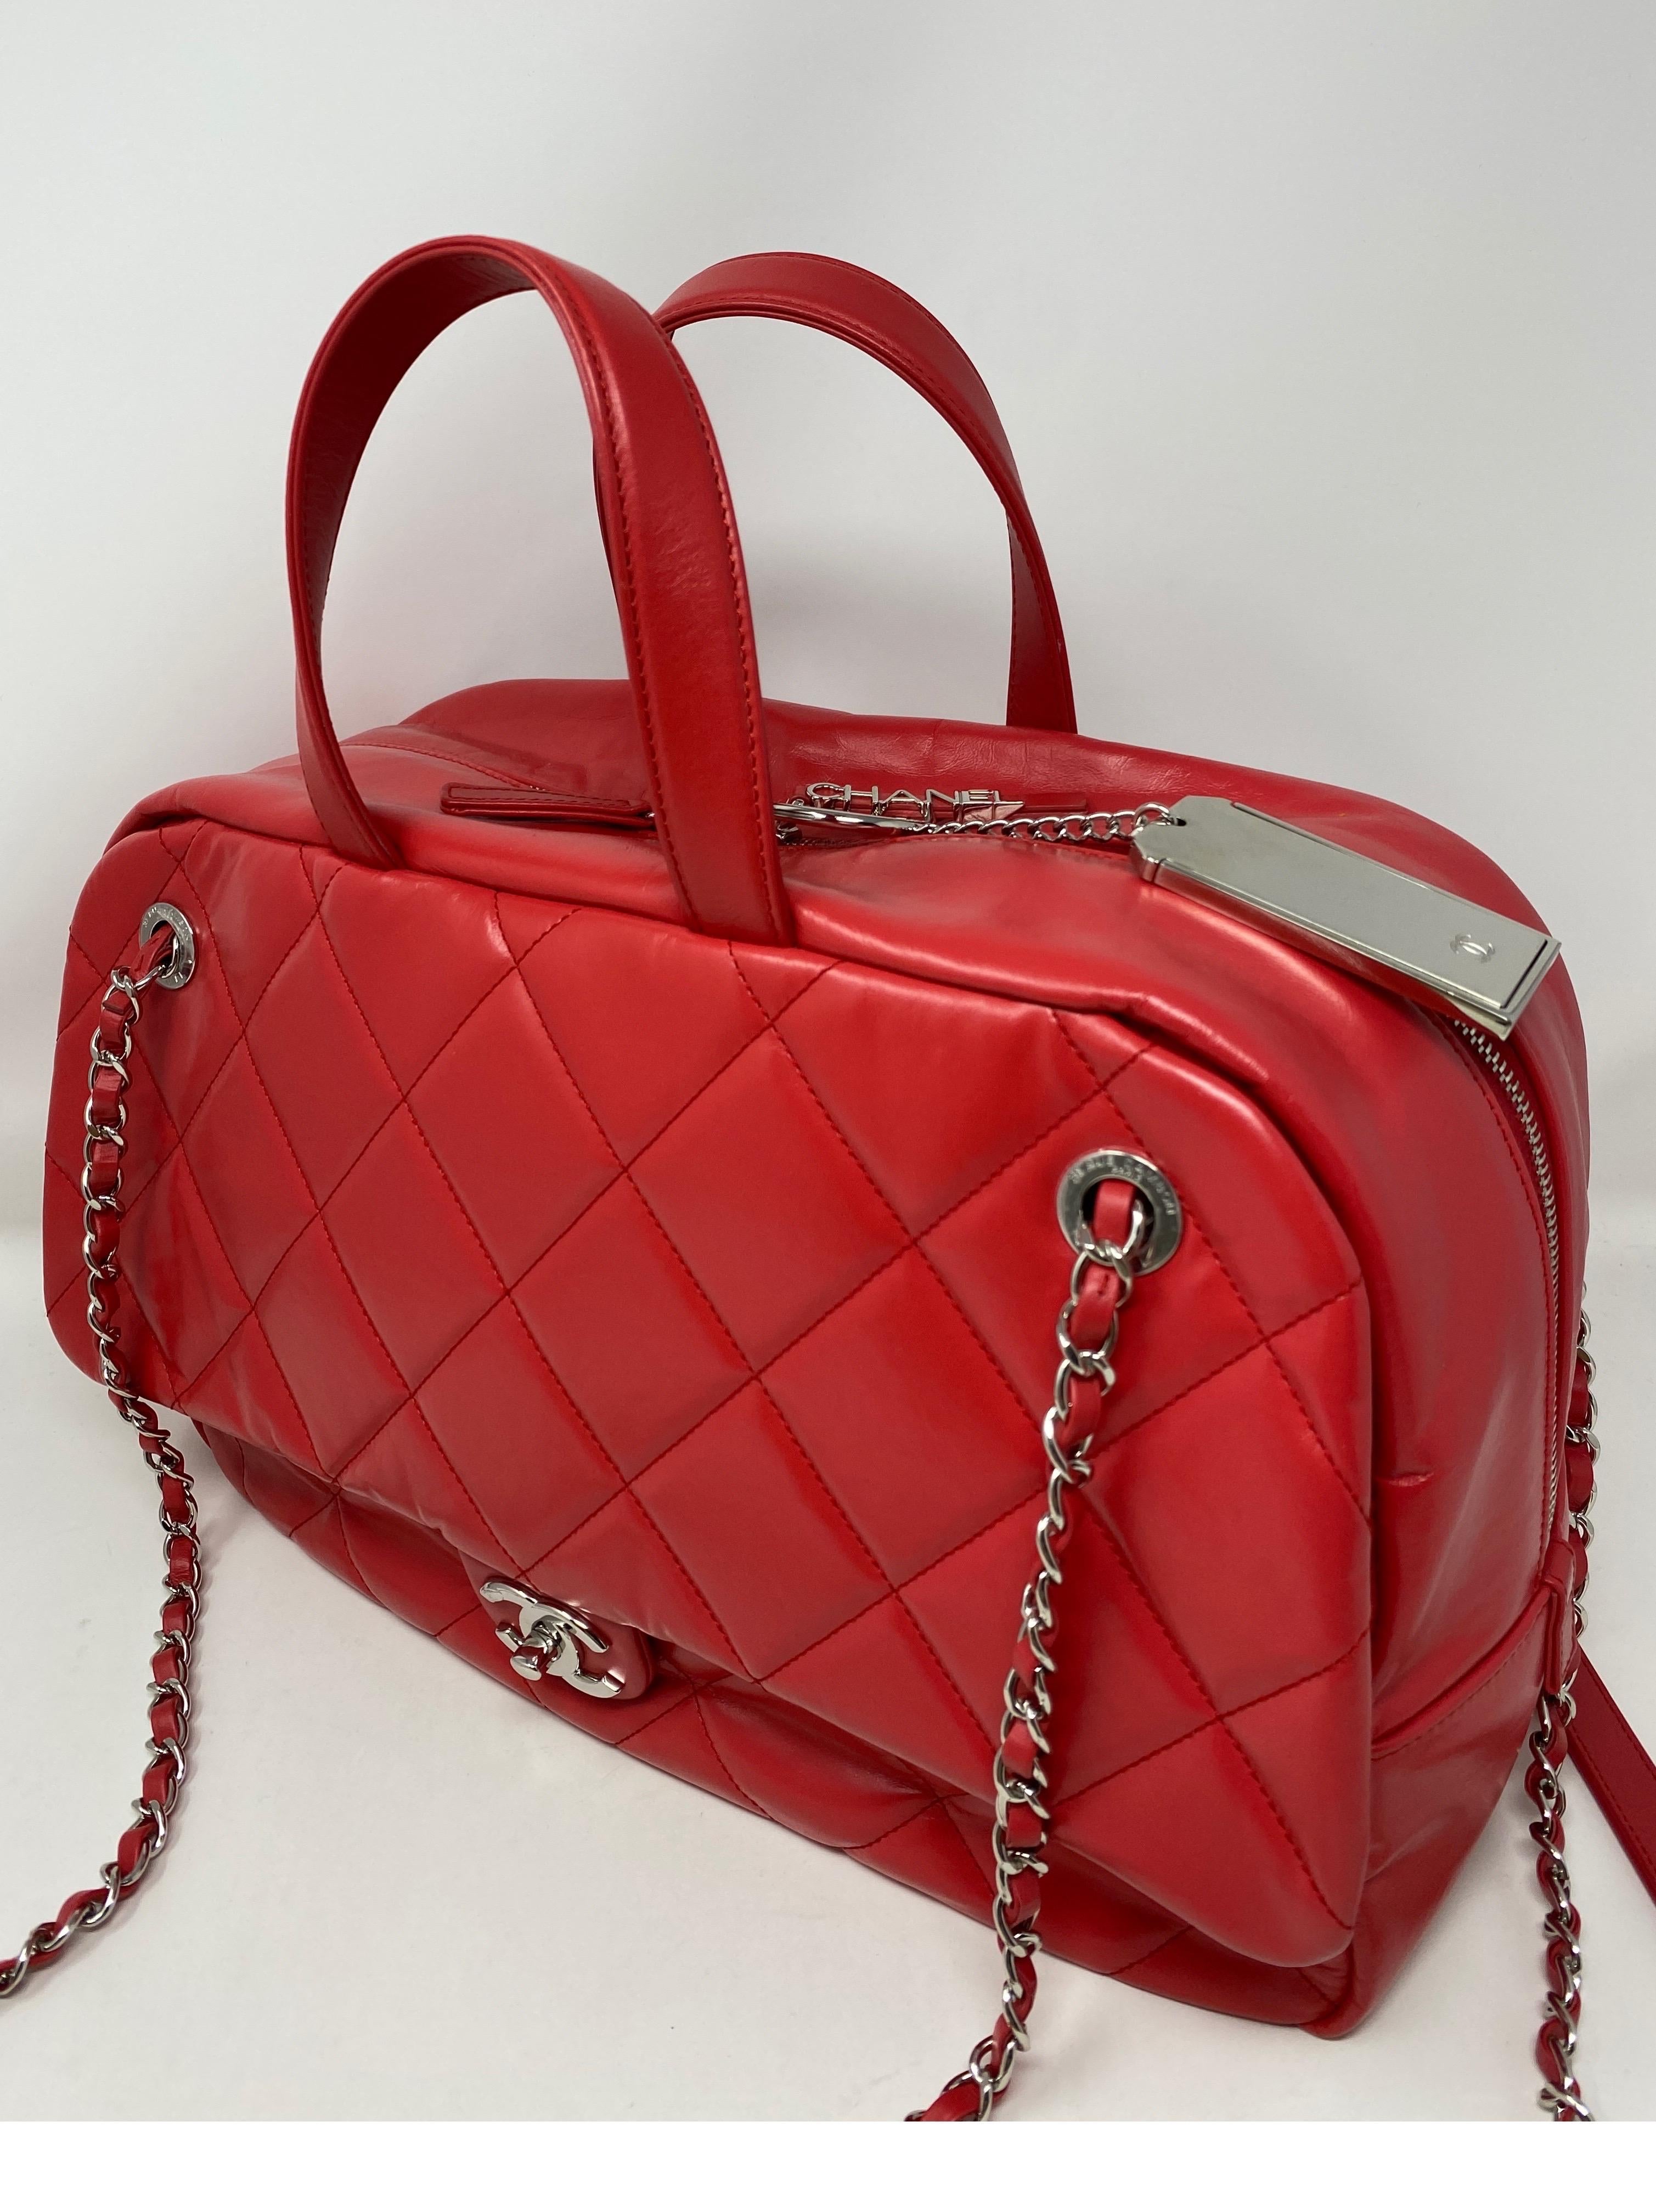 Chanel Large Red Bowler Bag  11